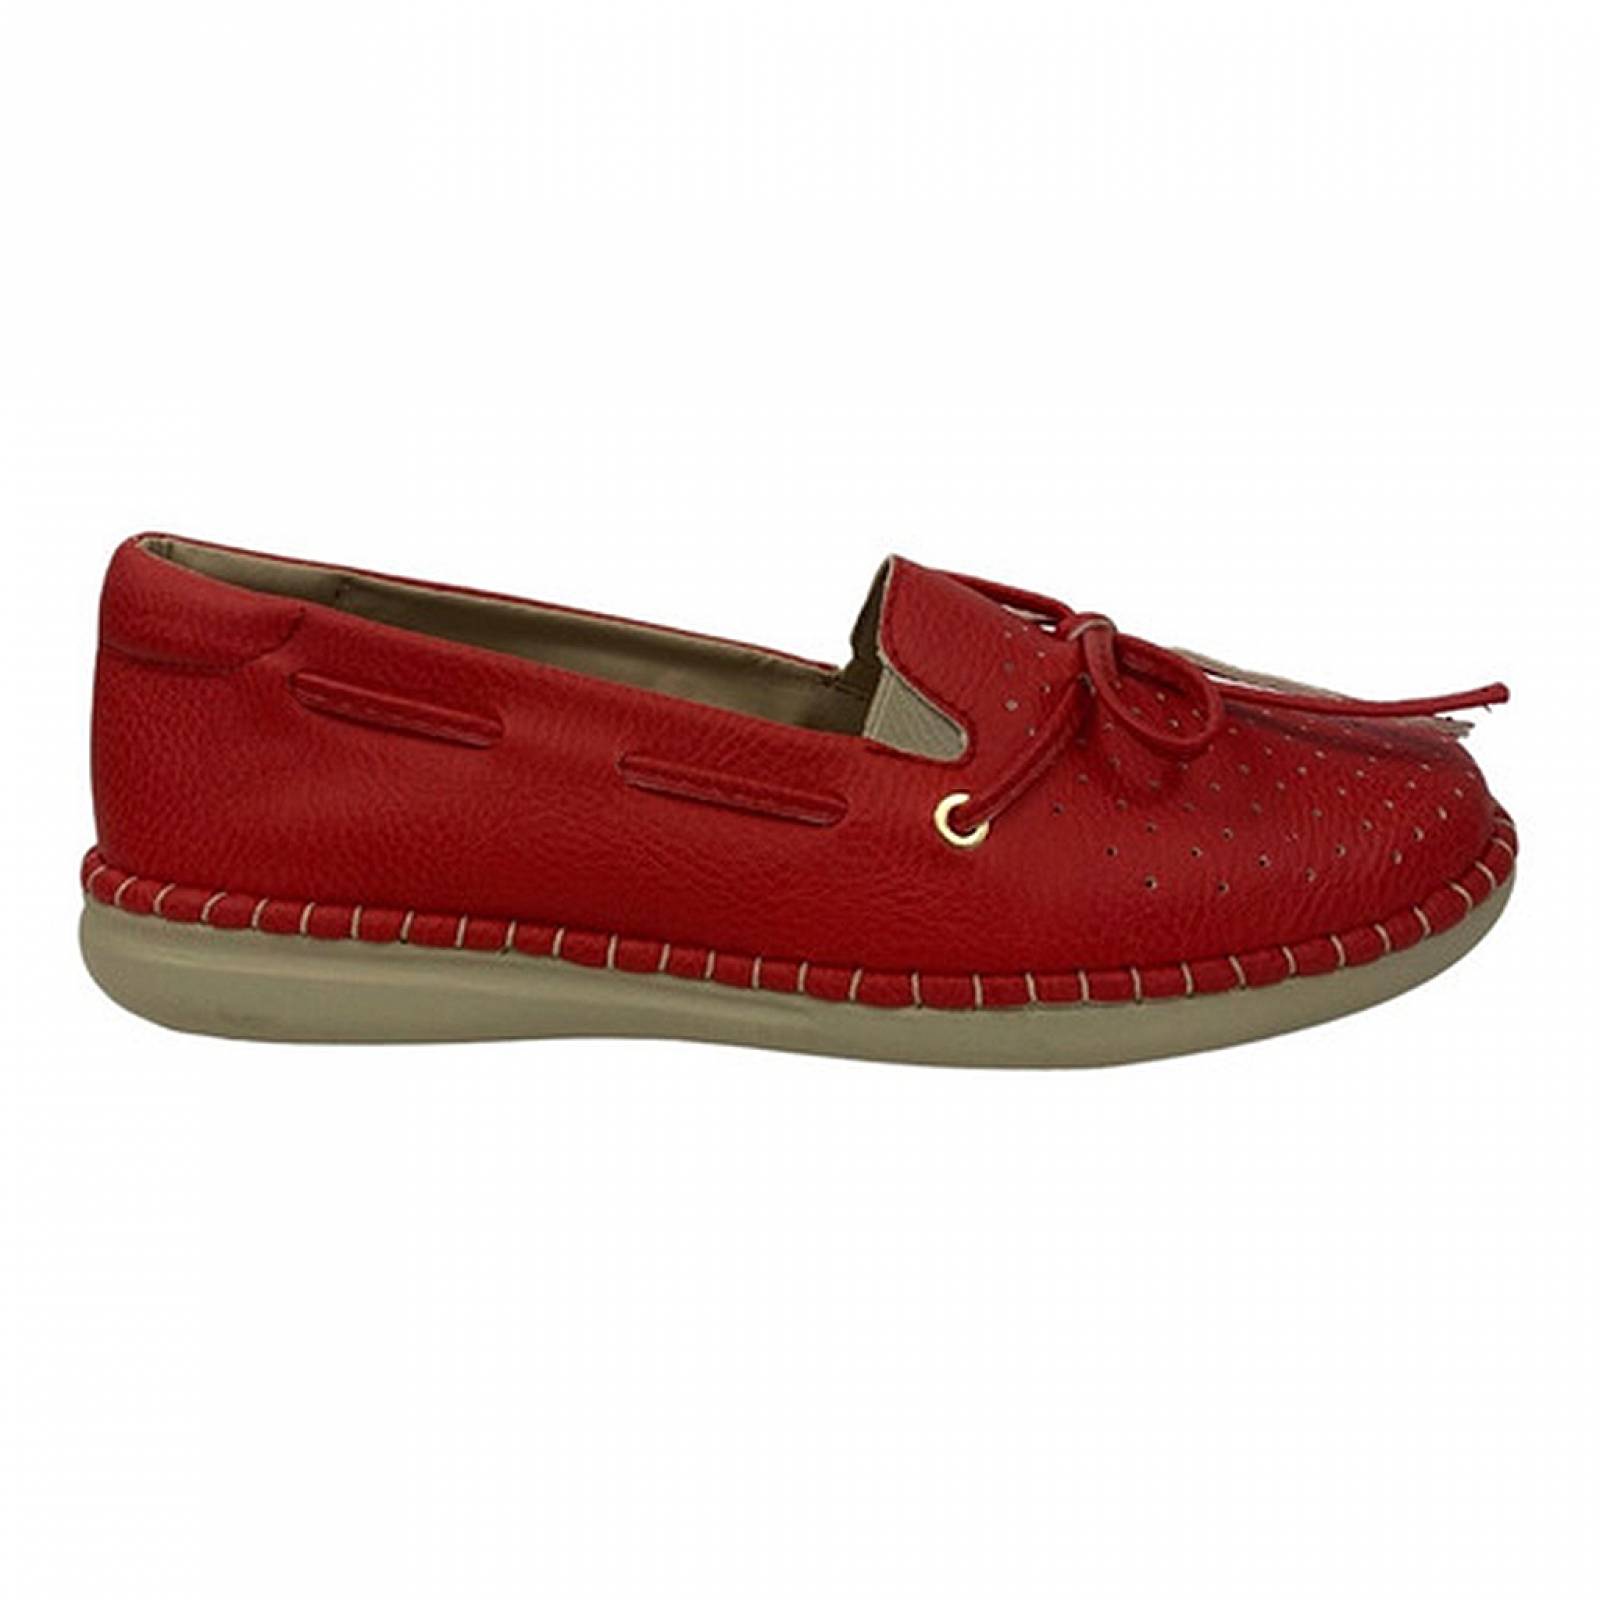 Zapatos planos mujer tejido con adorno rojo umber